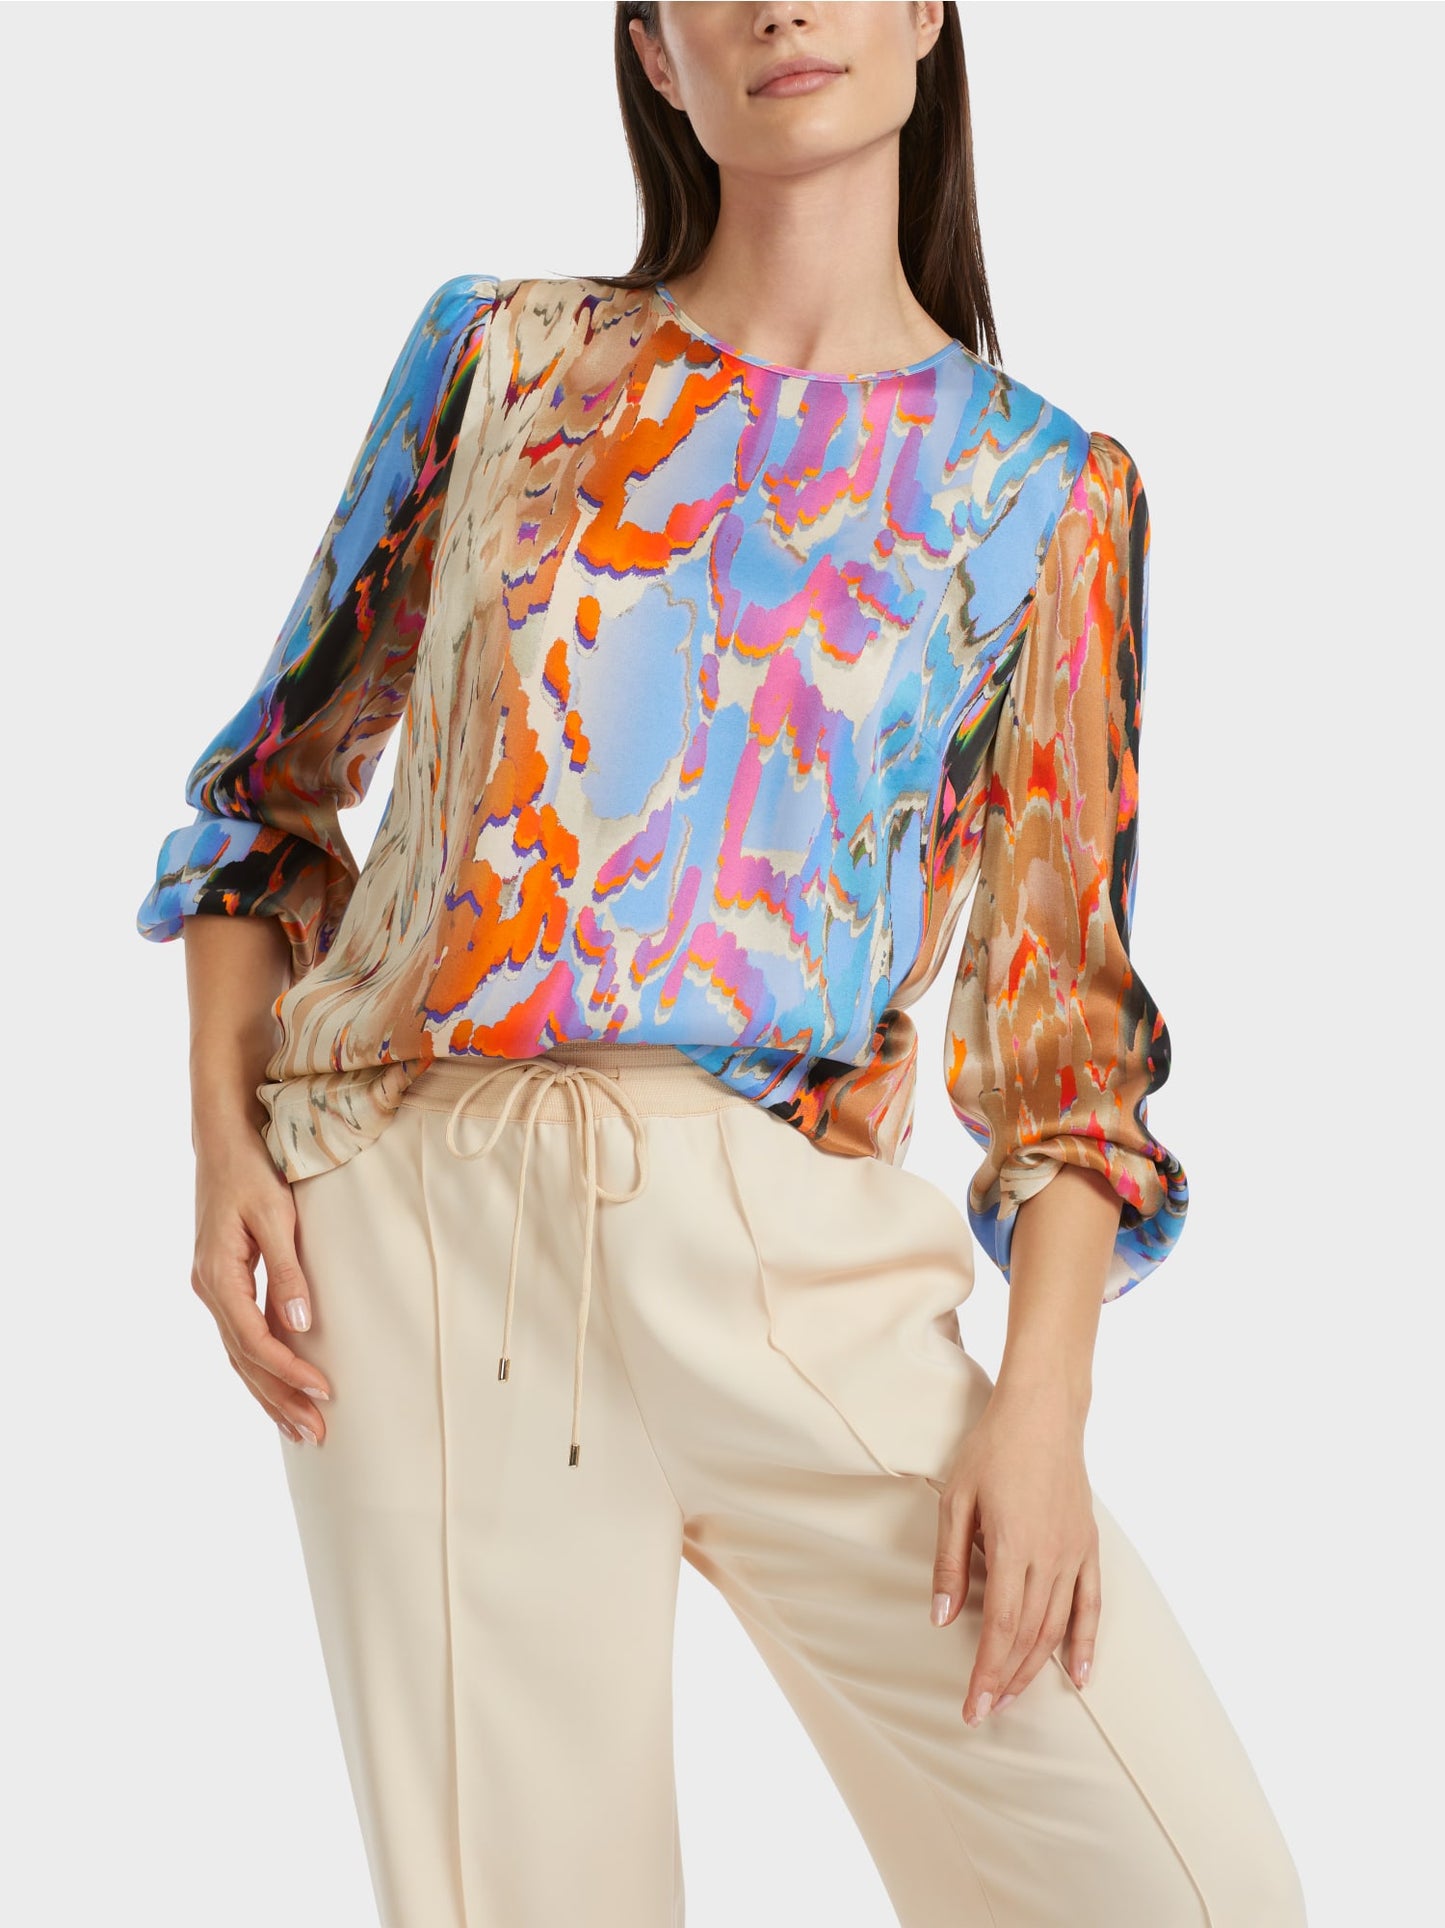 Colourful silk blouse